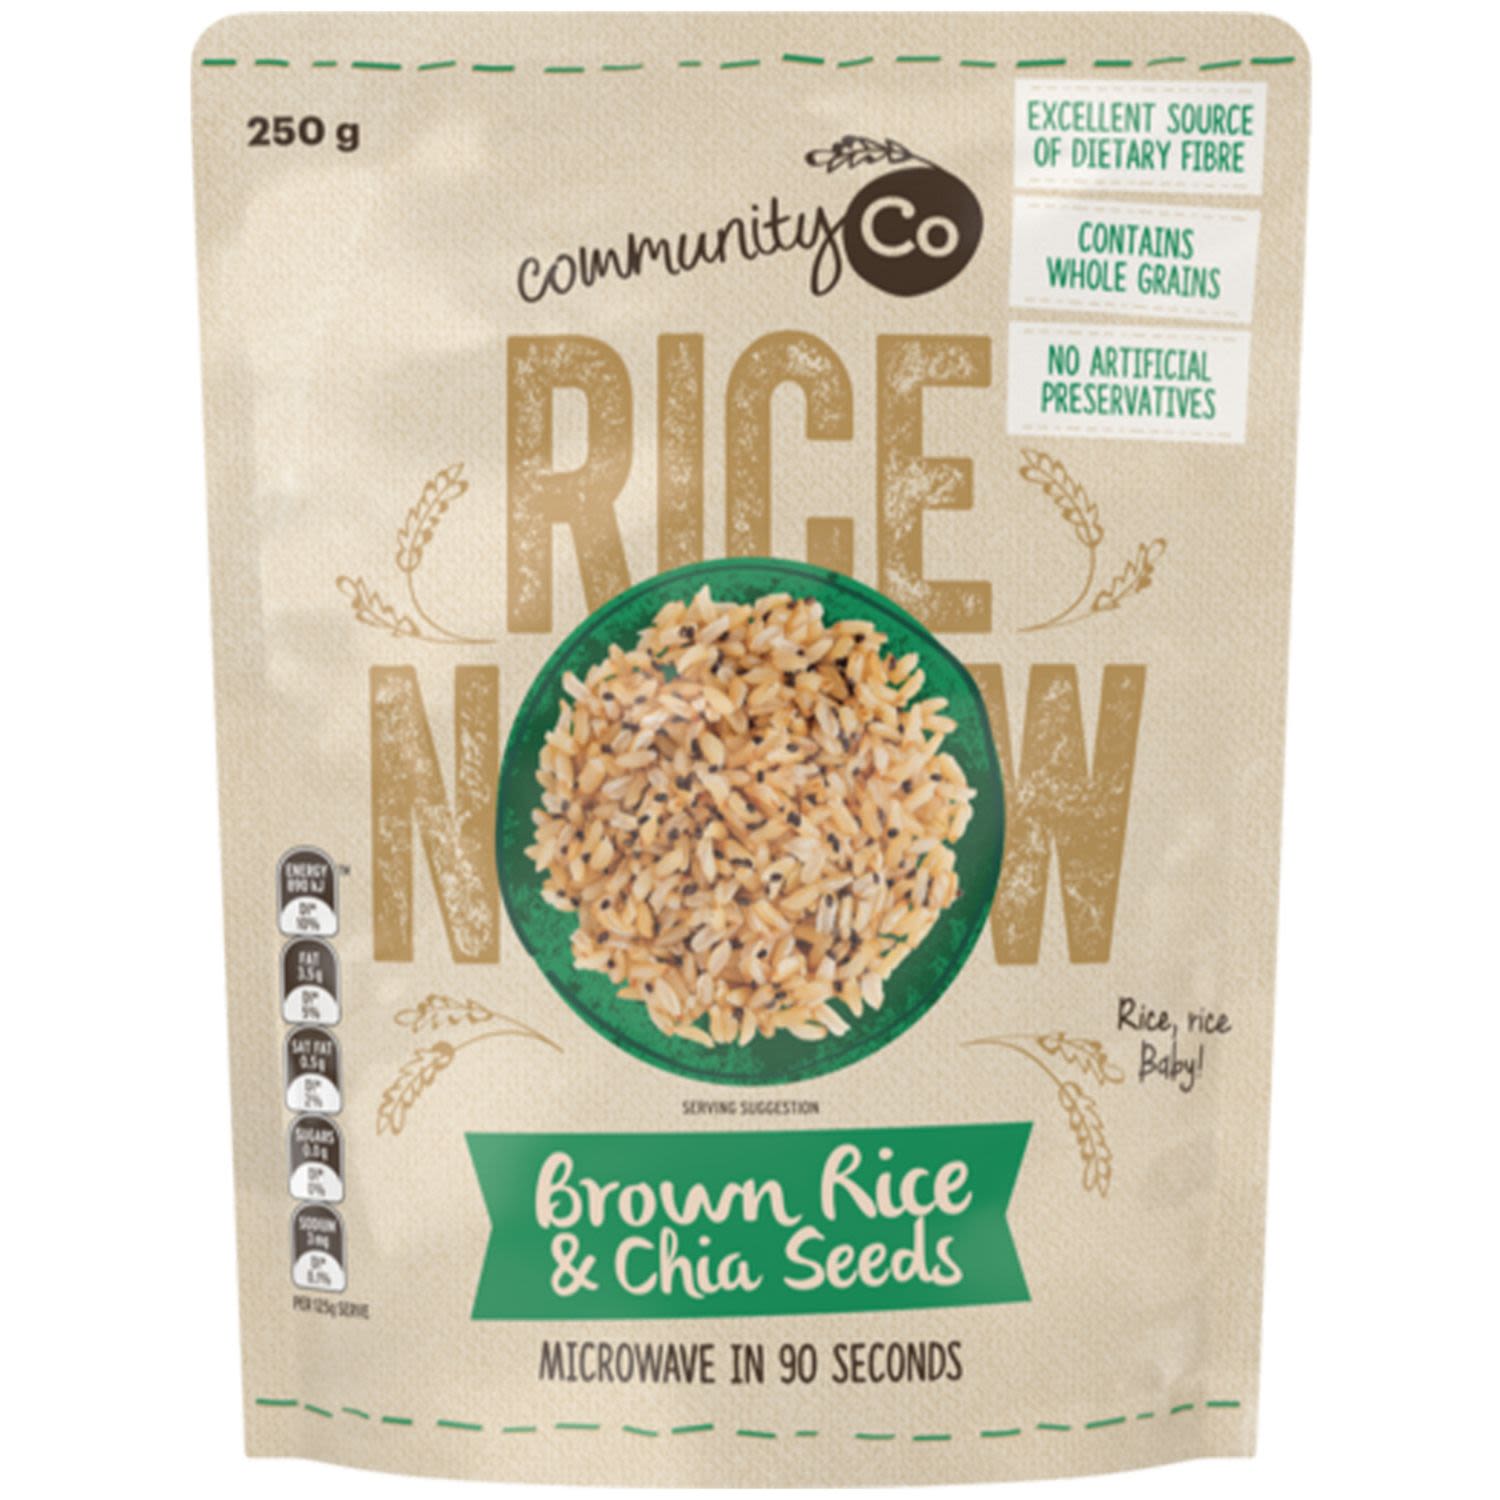 Community Co Microwaveable Brown Rice & Chia Seed, 250 Gram